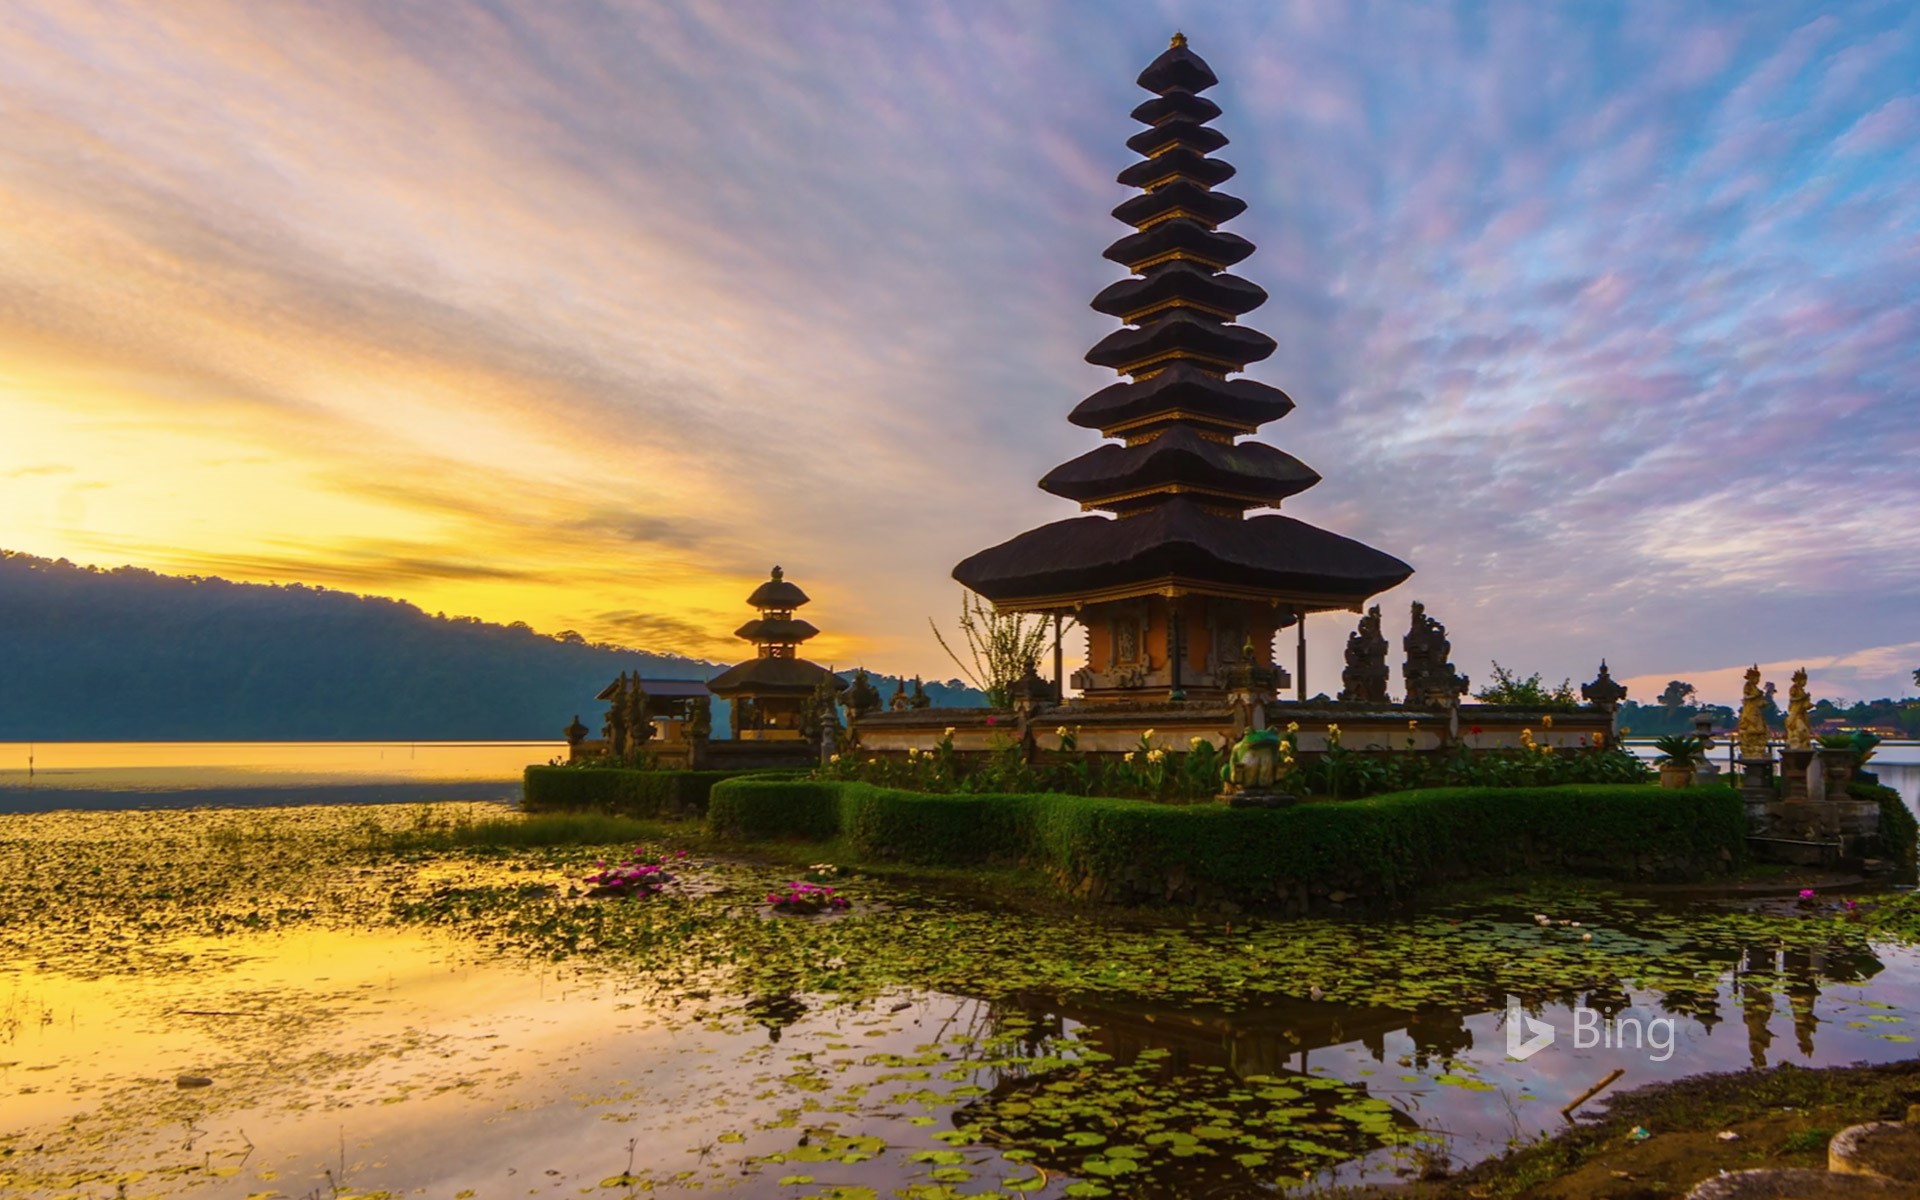 Sunrise at Pura Ulun Danu Bratan temple in Bali, Indonesia